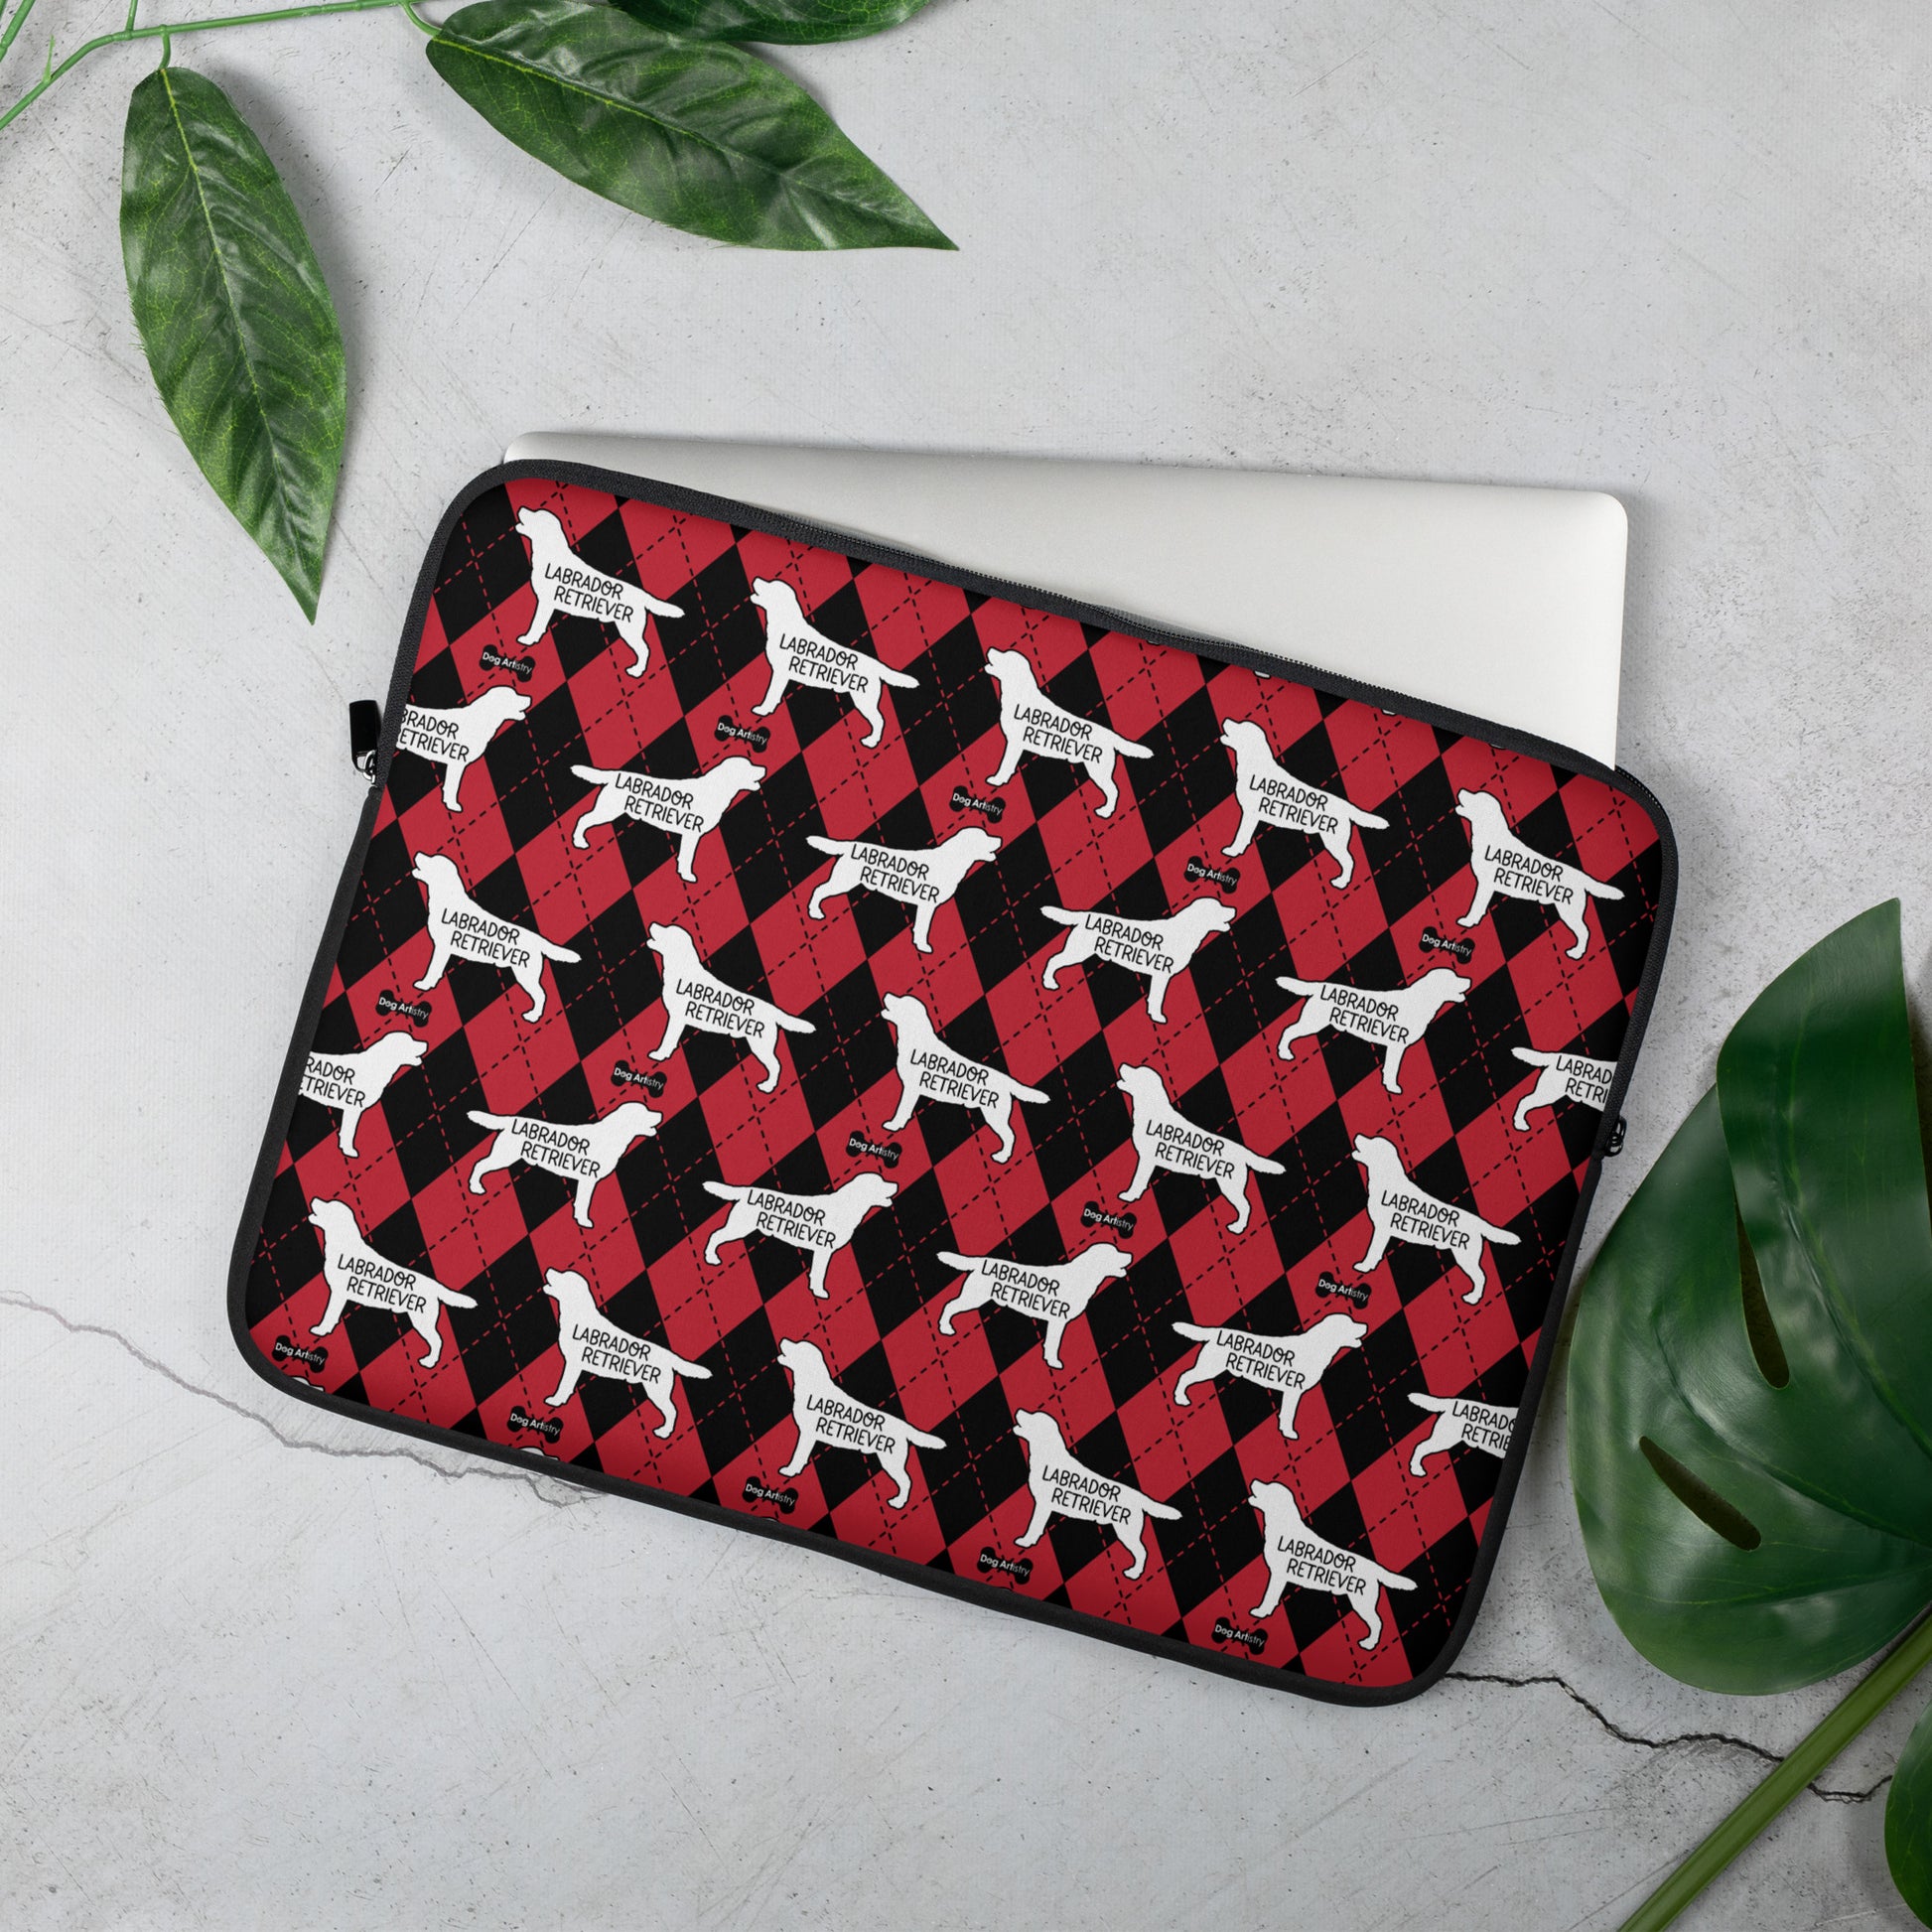 Labrador Retriever red and black argyle laptop sleeve by Dog Artistry